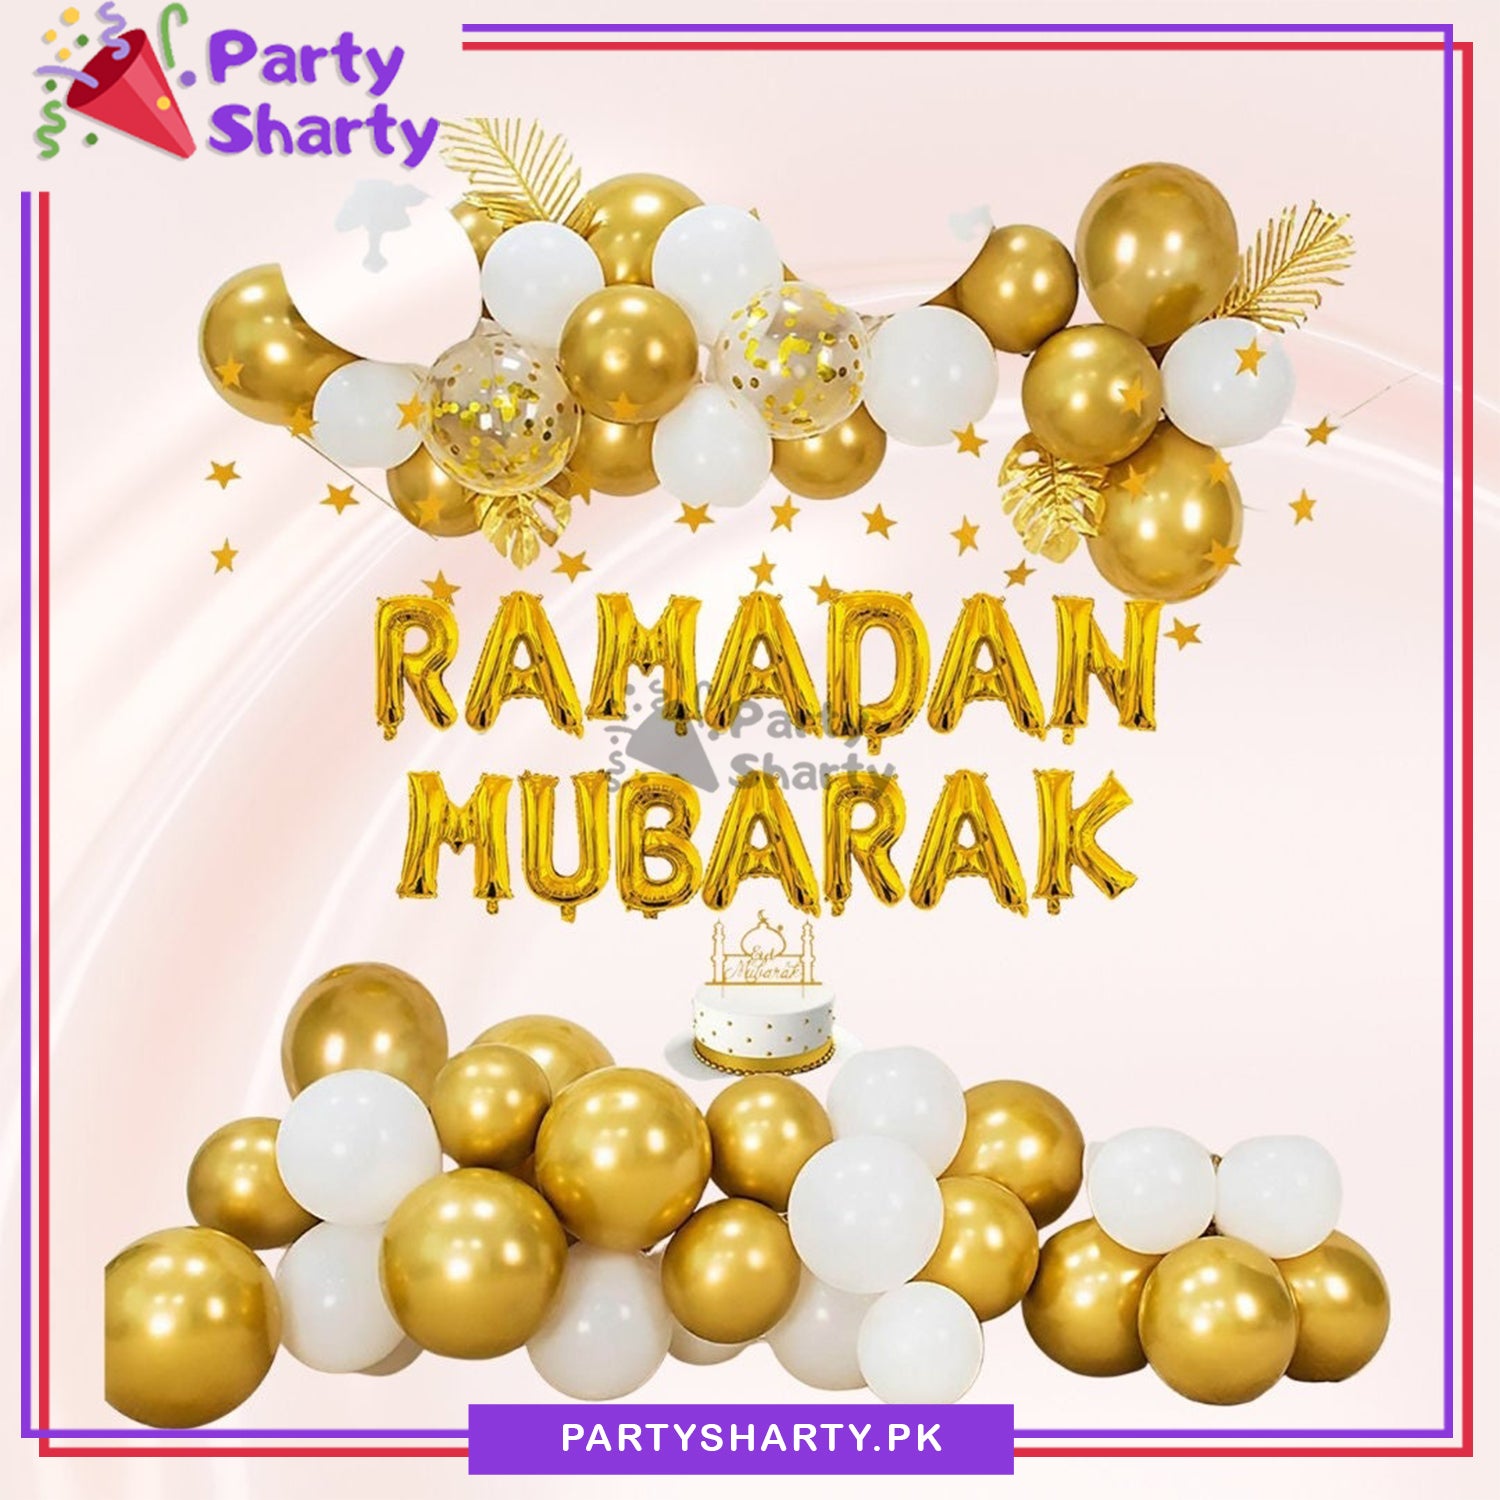 Ramadan Mubarak Golden & White Balloon Theme Set for Ramadan Iftar Party Decoration and Celebration